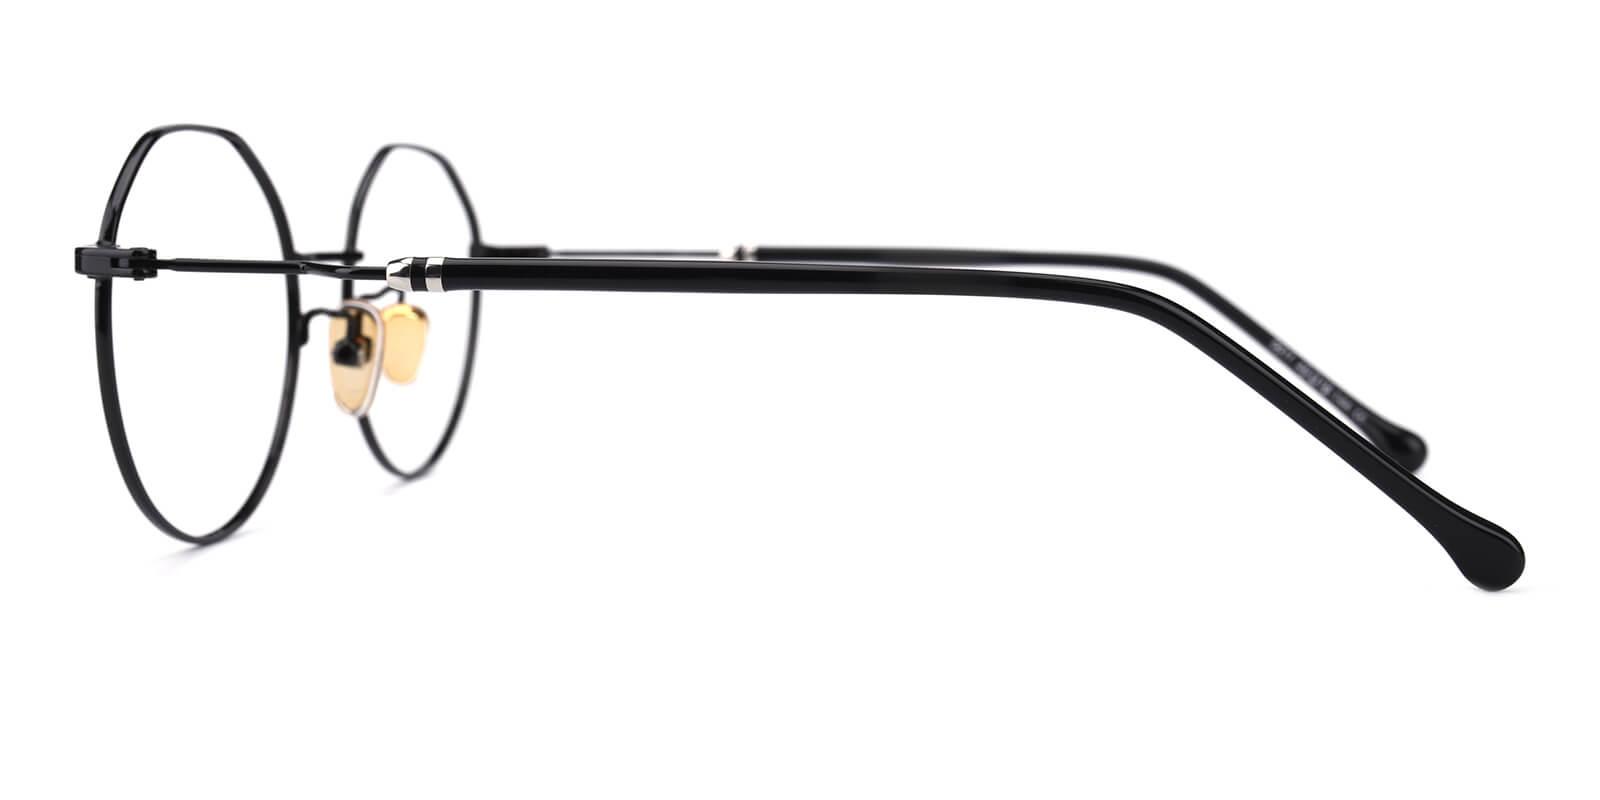 Clarker-Black-Geometric / Round-Metal-Eyeglasses-detail